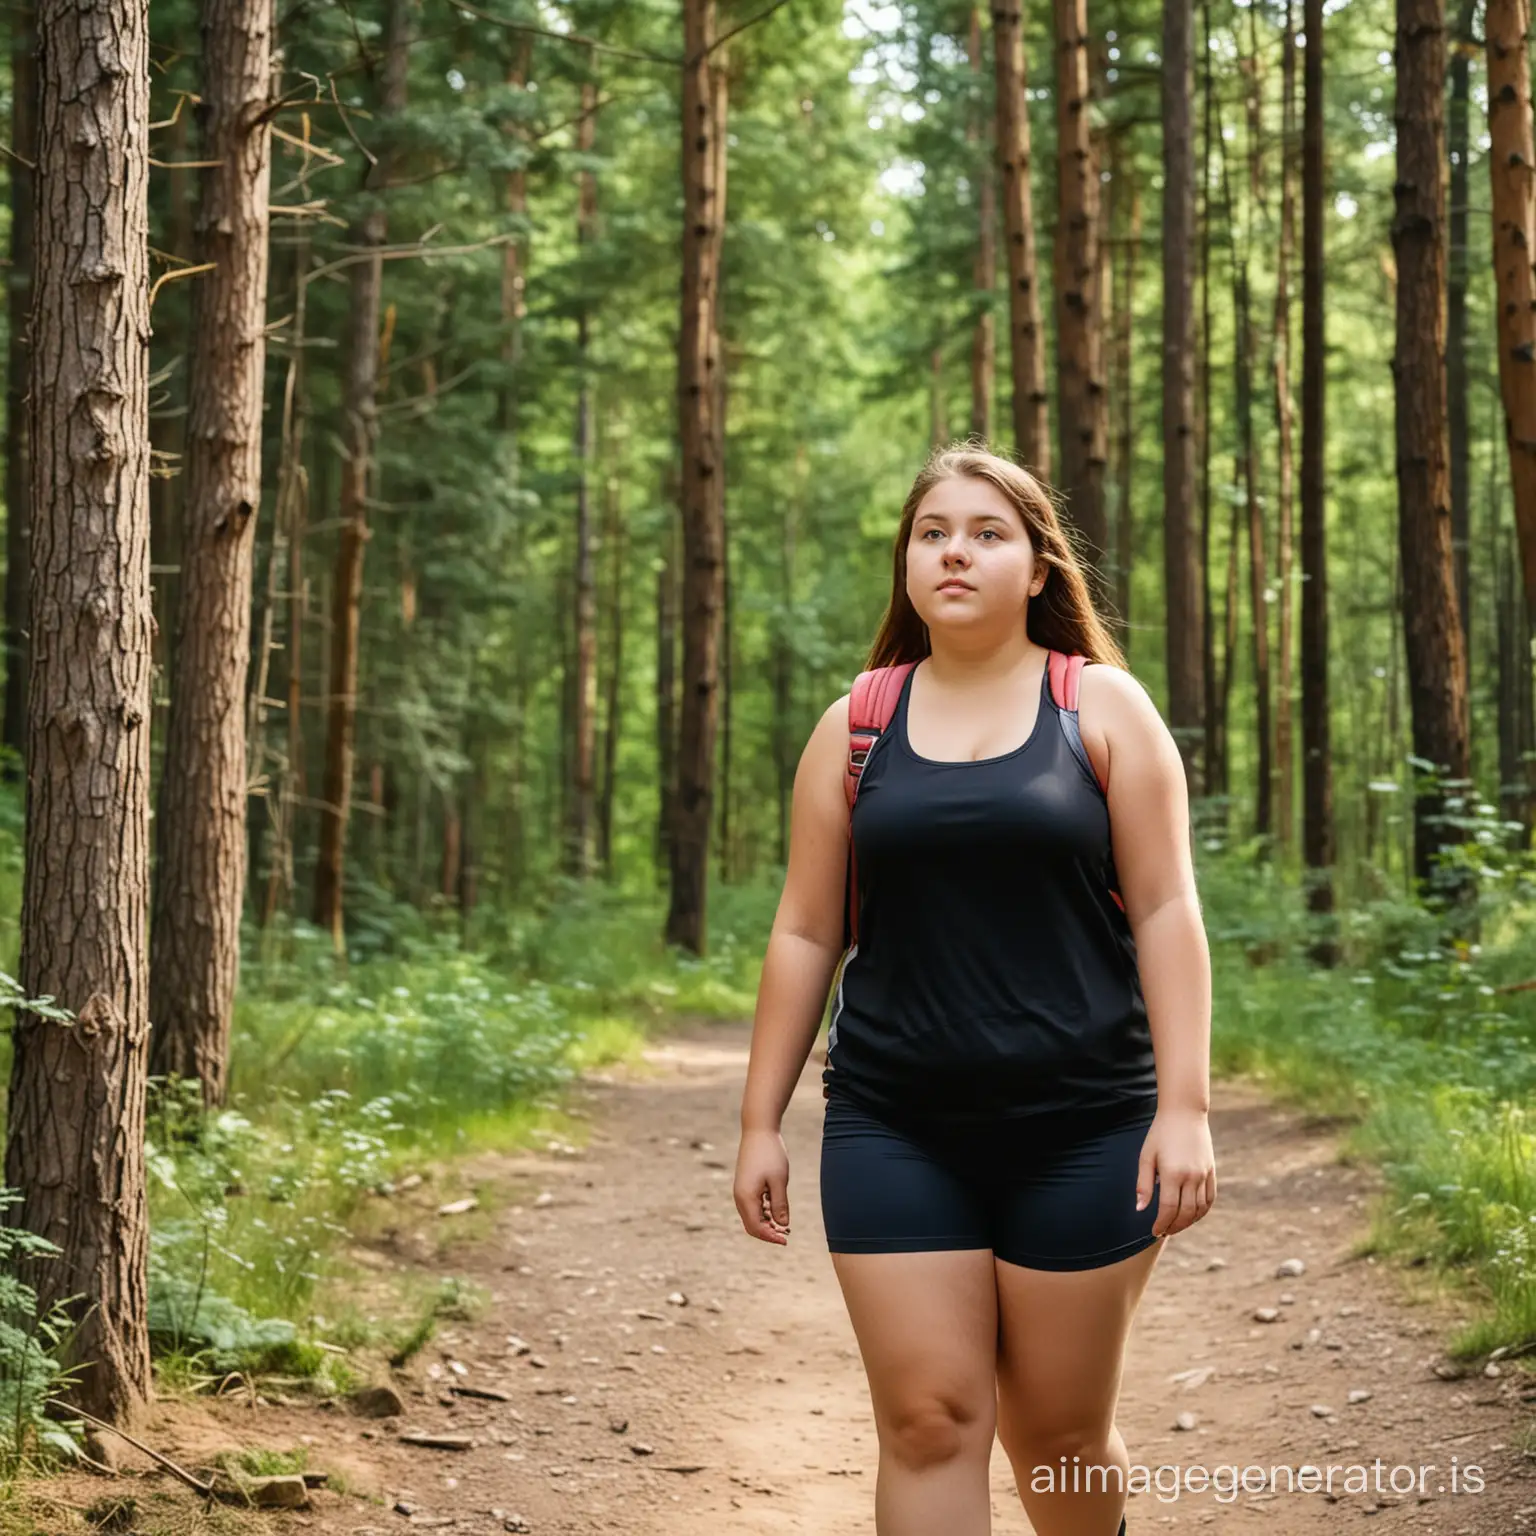 Chubby-Teenage-Girl-Hiking-in-Sportswear-Through-Summer-Forest-Mountain